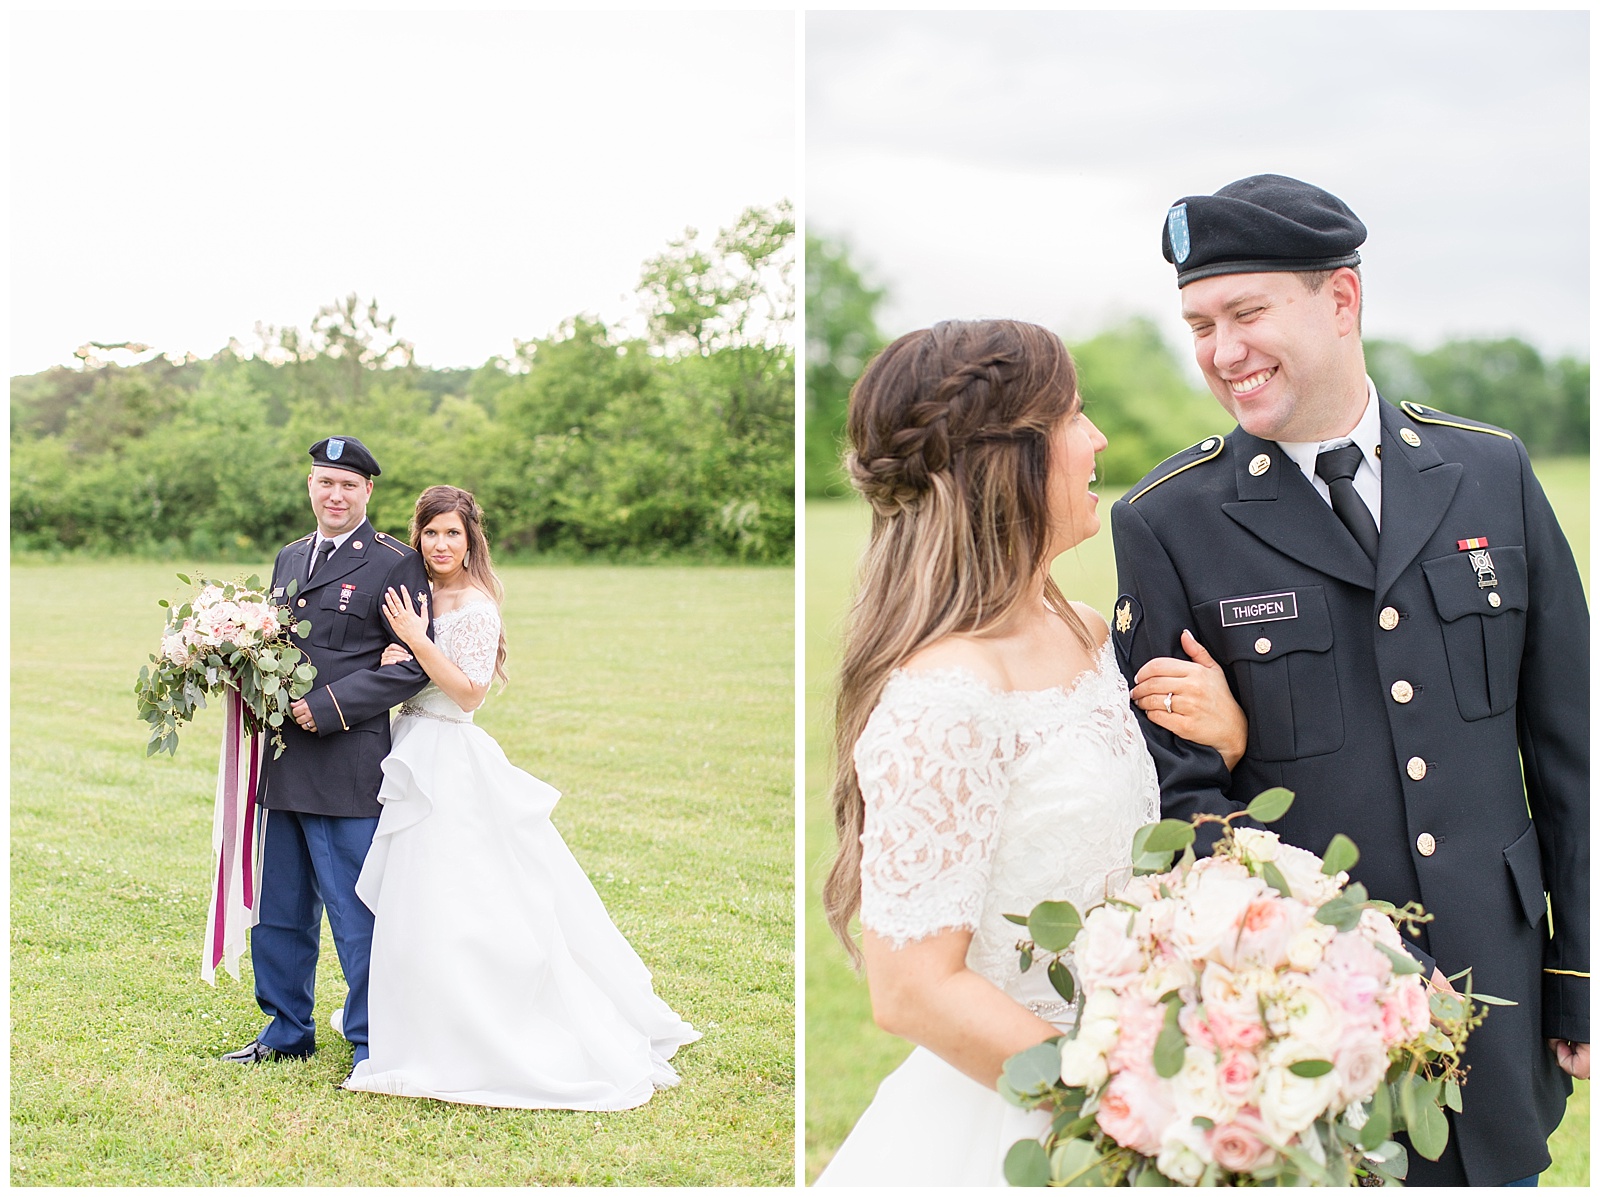 Why We Love Being Wedding Photographers | Katie & Alec Photography - Best Wedding Photographers in Birmingham, Alabama